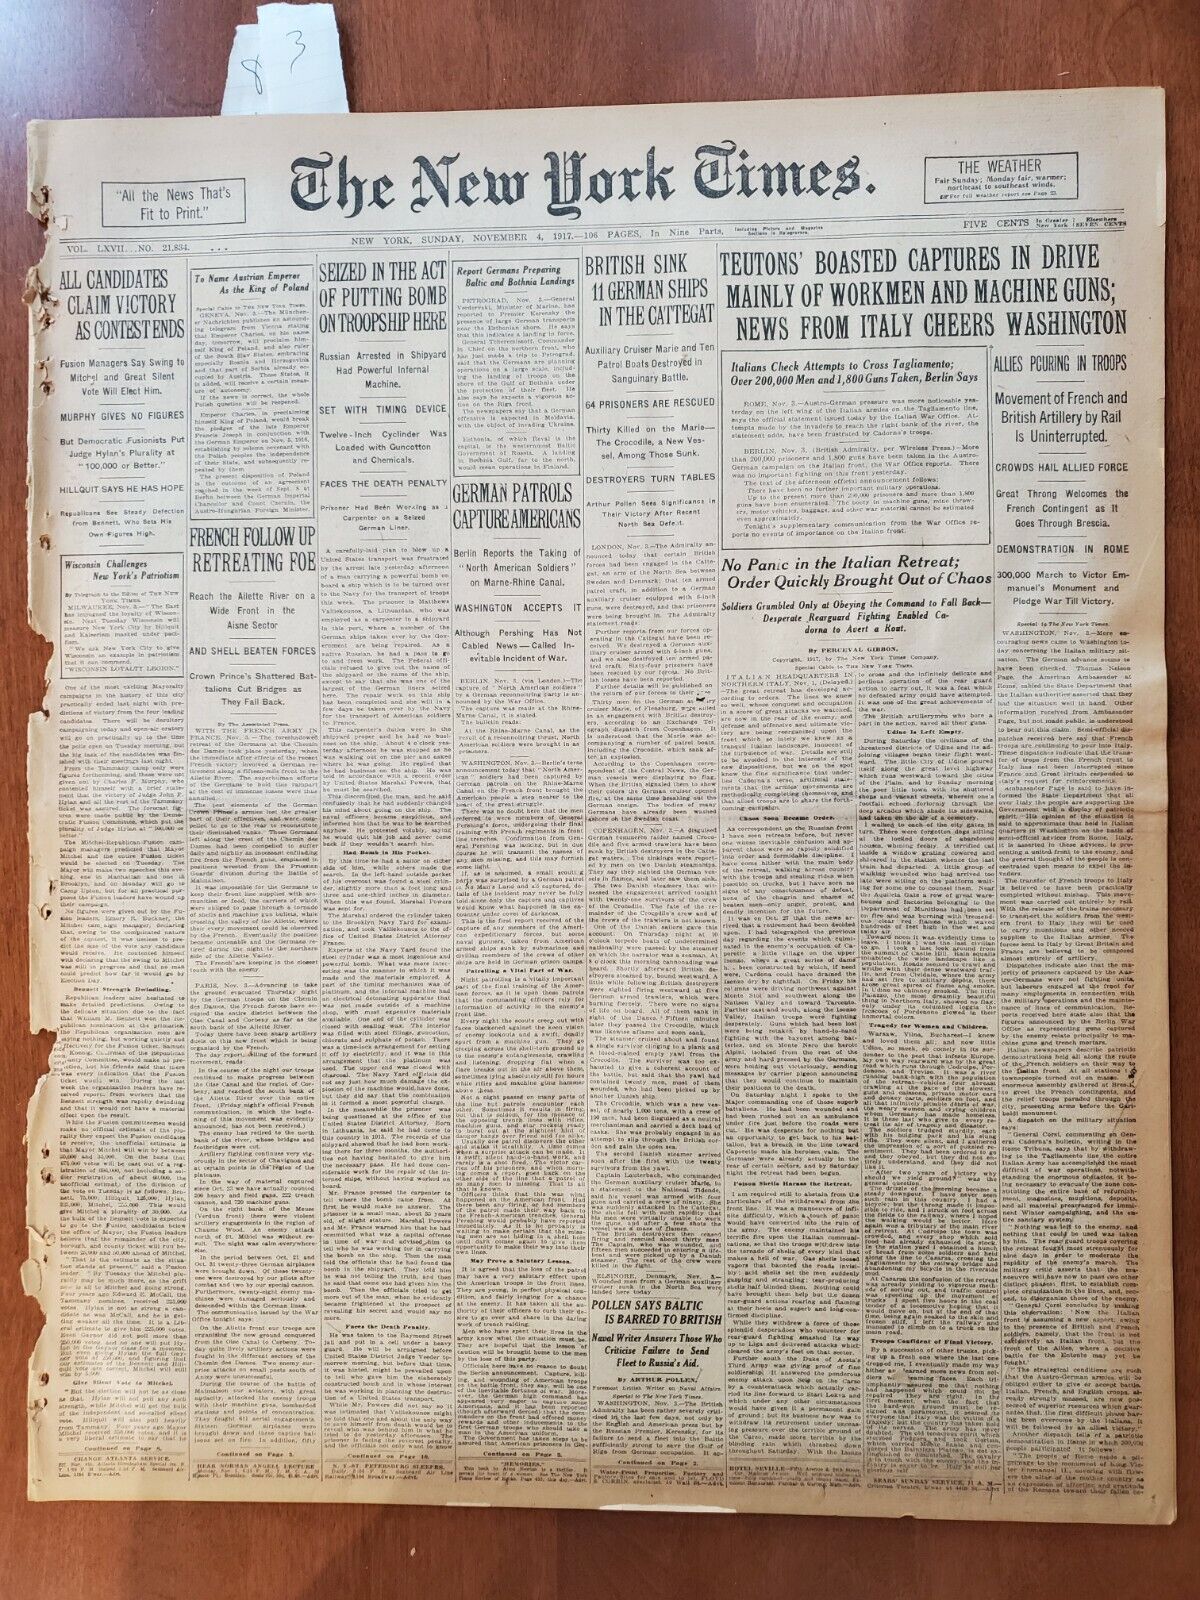 1917 NOVEMBER 4 NEW YORK TIMES - NEWS FROM ITALY CHEERS WASHINGTON - NT 8060